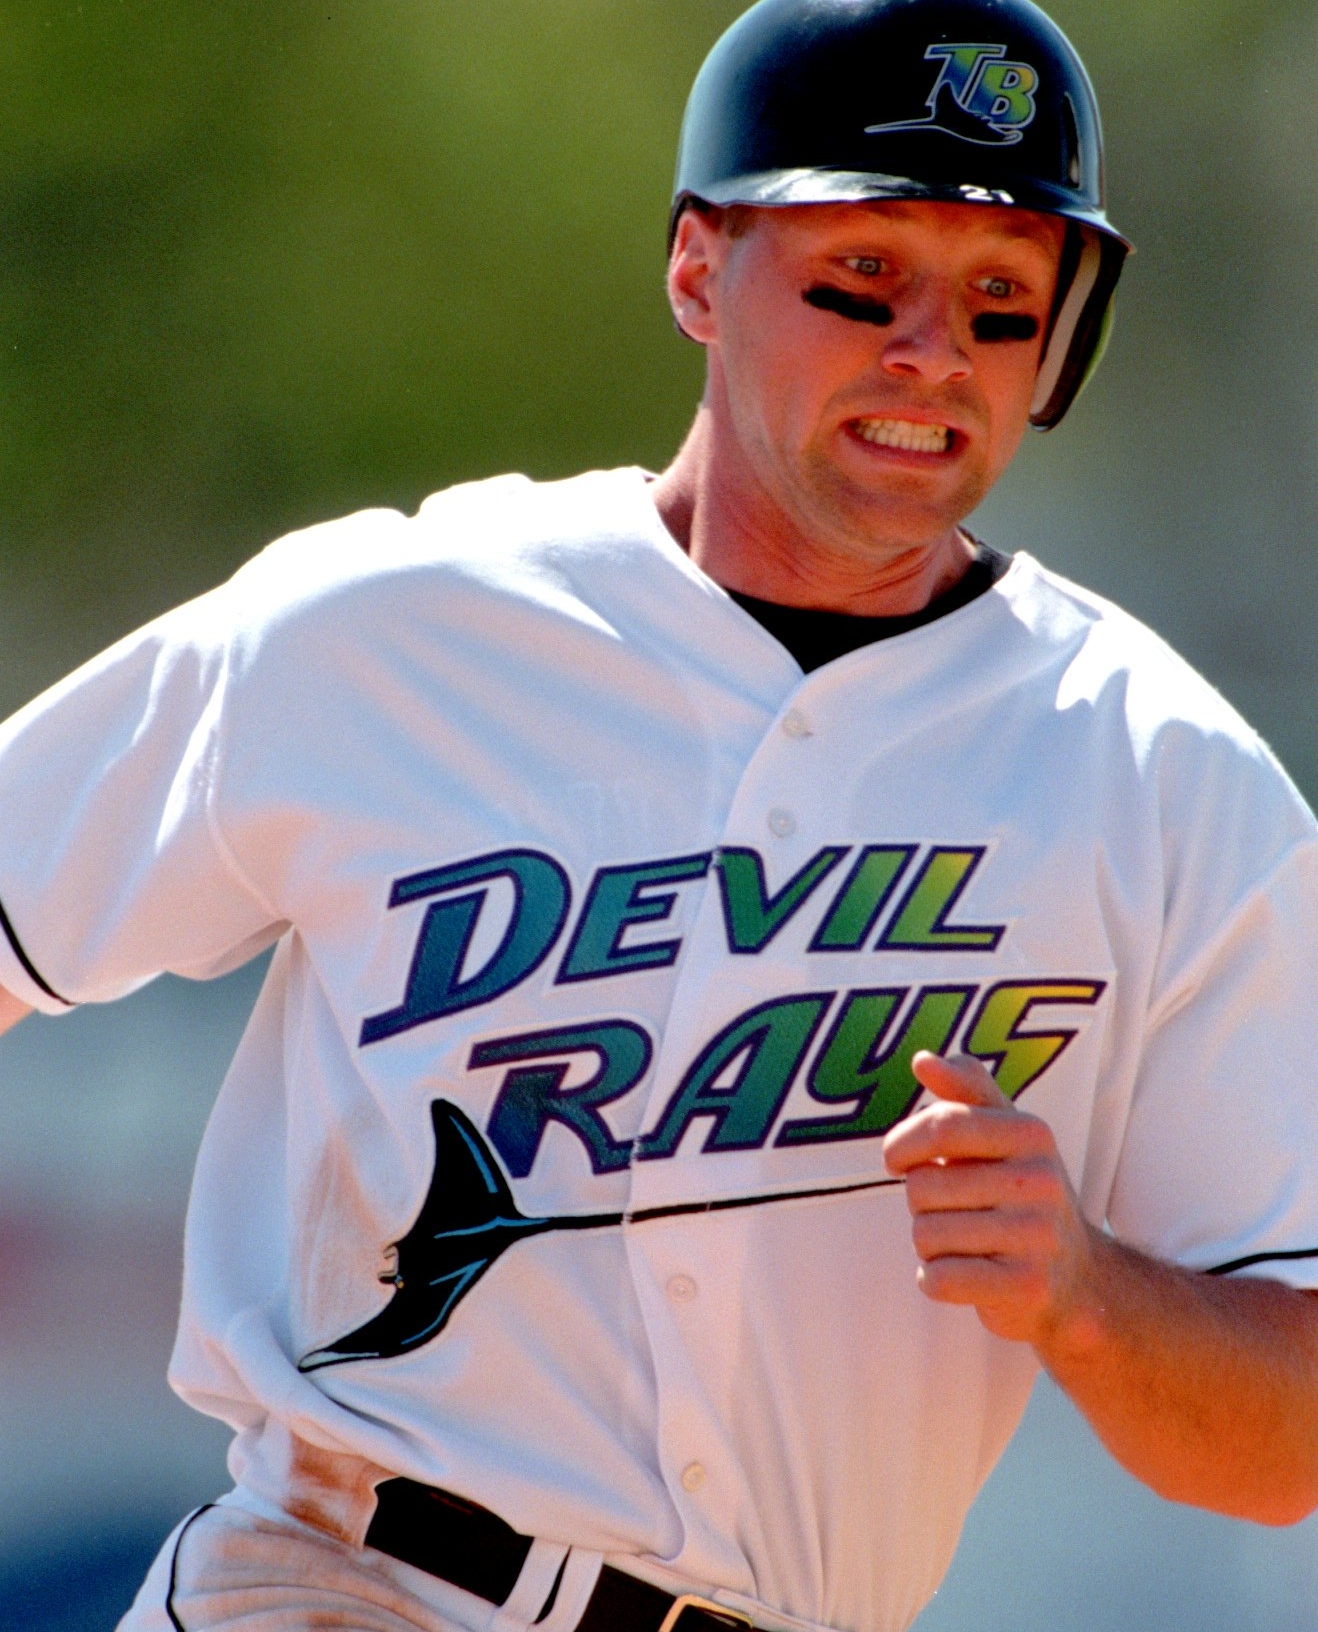 Tampa Bay to wear throwback Devil Rays uniforms this MLB season